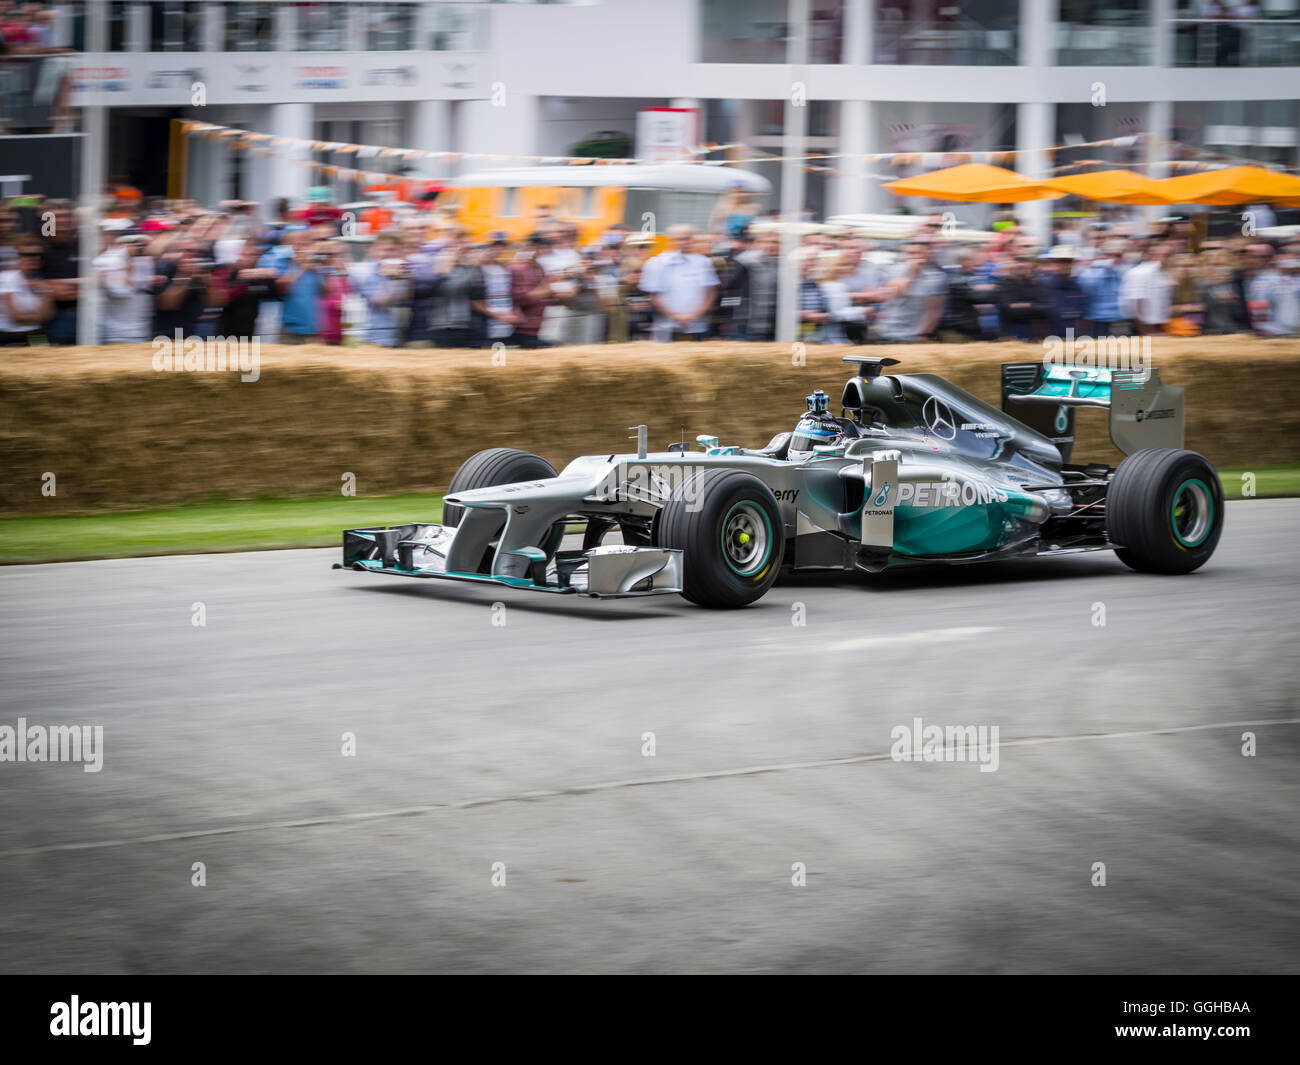 2011 Mercedes MGP W02 Formula 1 racing car, driver Anthony Davidson, Goodwood Festival of Speed 2014, racing, car racing, classi Stock Photo